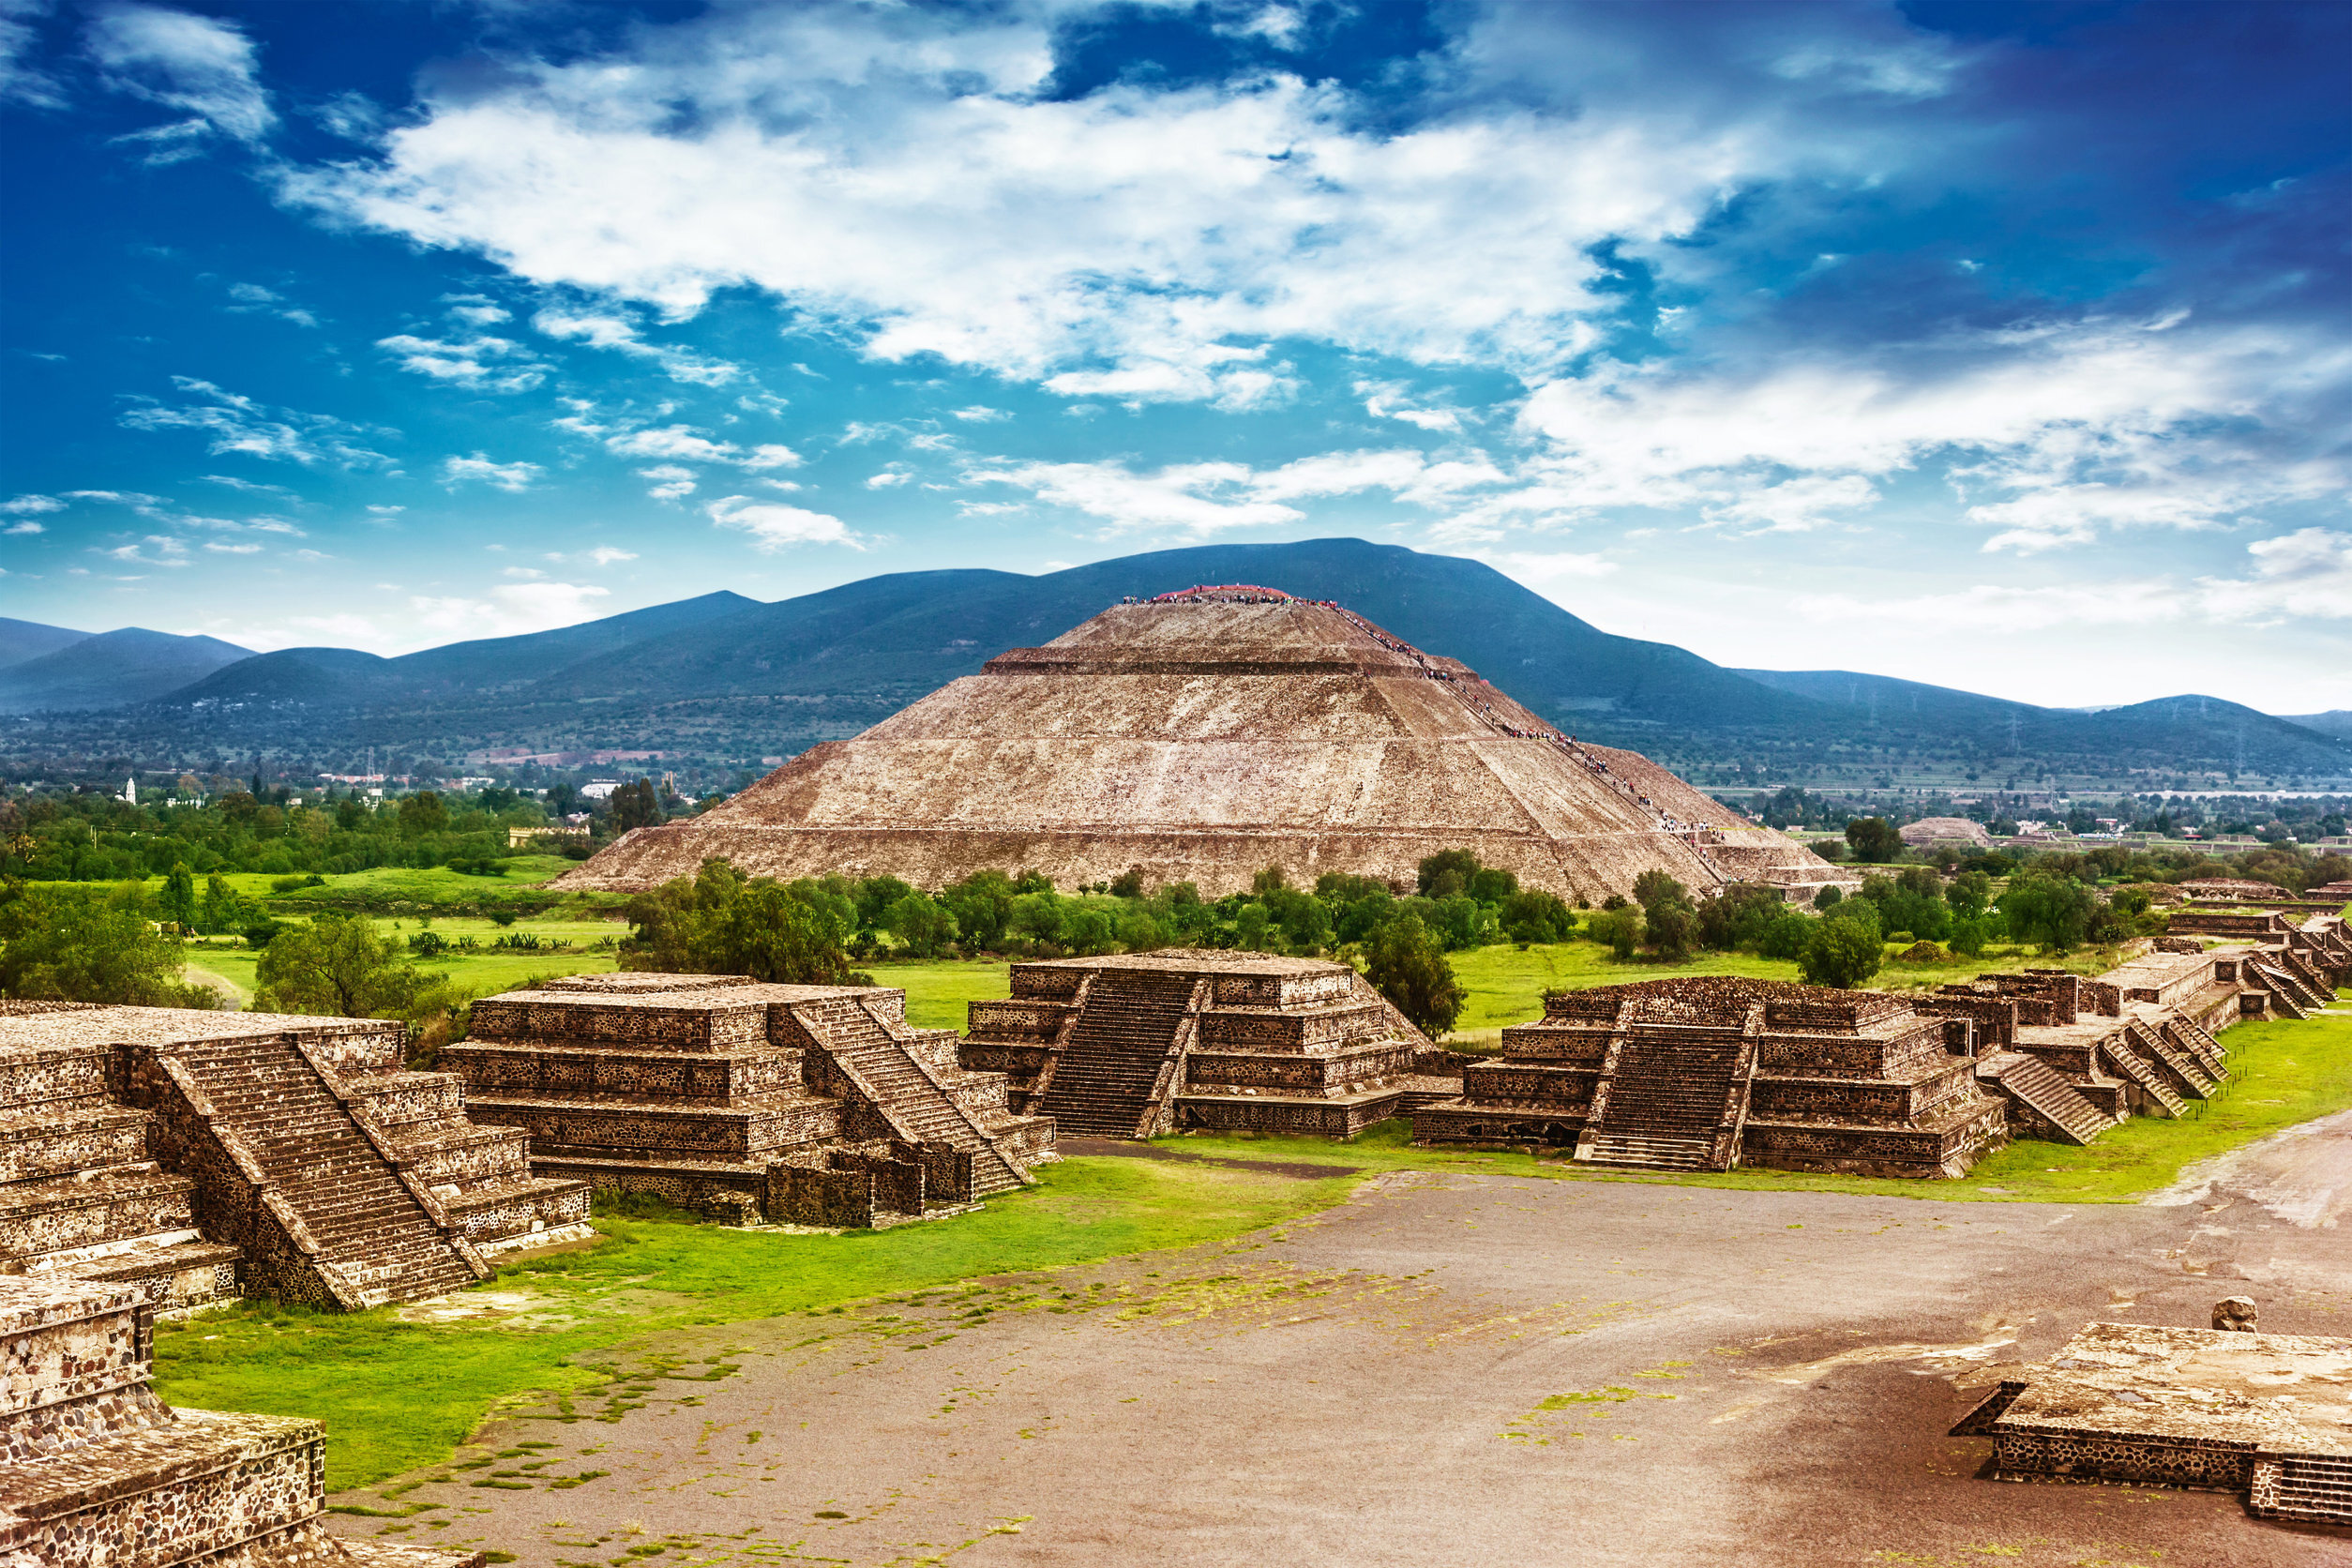 Природные объекты мексики. Пирамиды Теотиуакан Мексика. Теотиуакан Мексика пирамида солнца. Пирамиды в Мехико Теотиуакан. Теотиуакан пирамида солнца пирамида Луны.